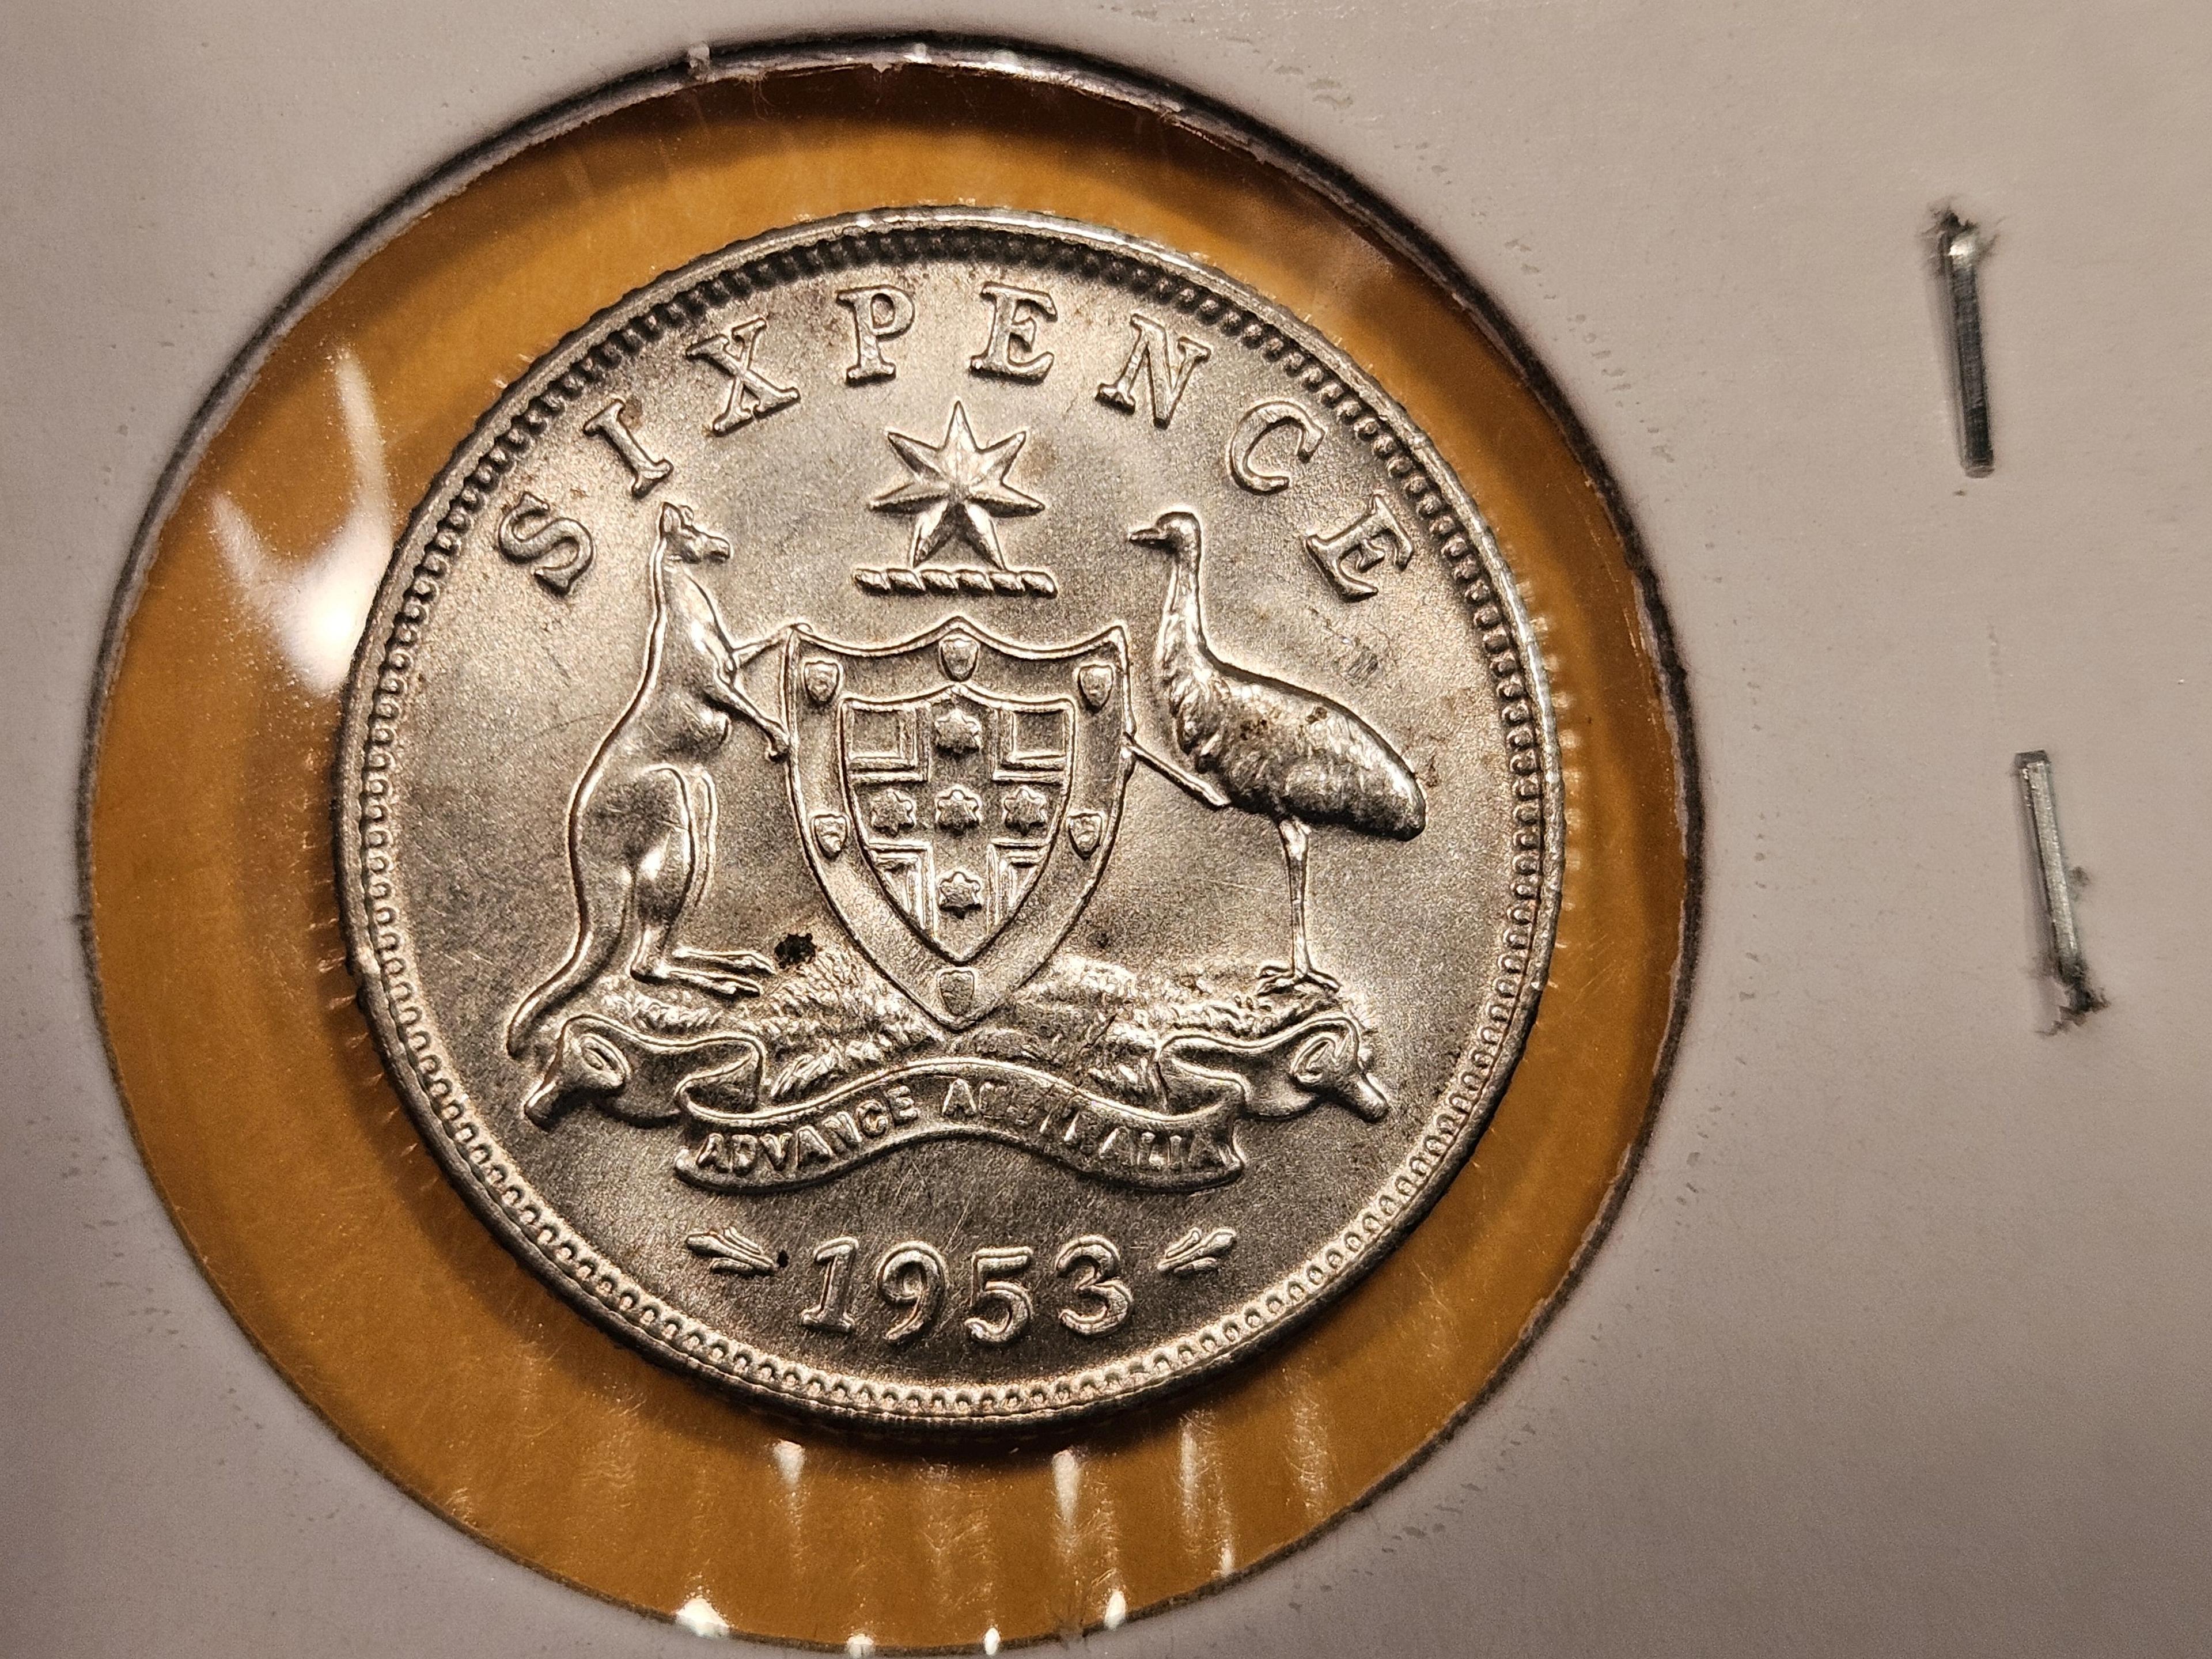 1953 Australia 6 pence